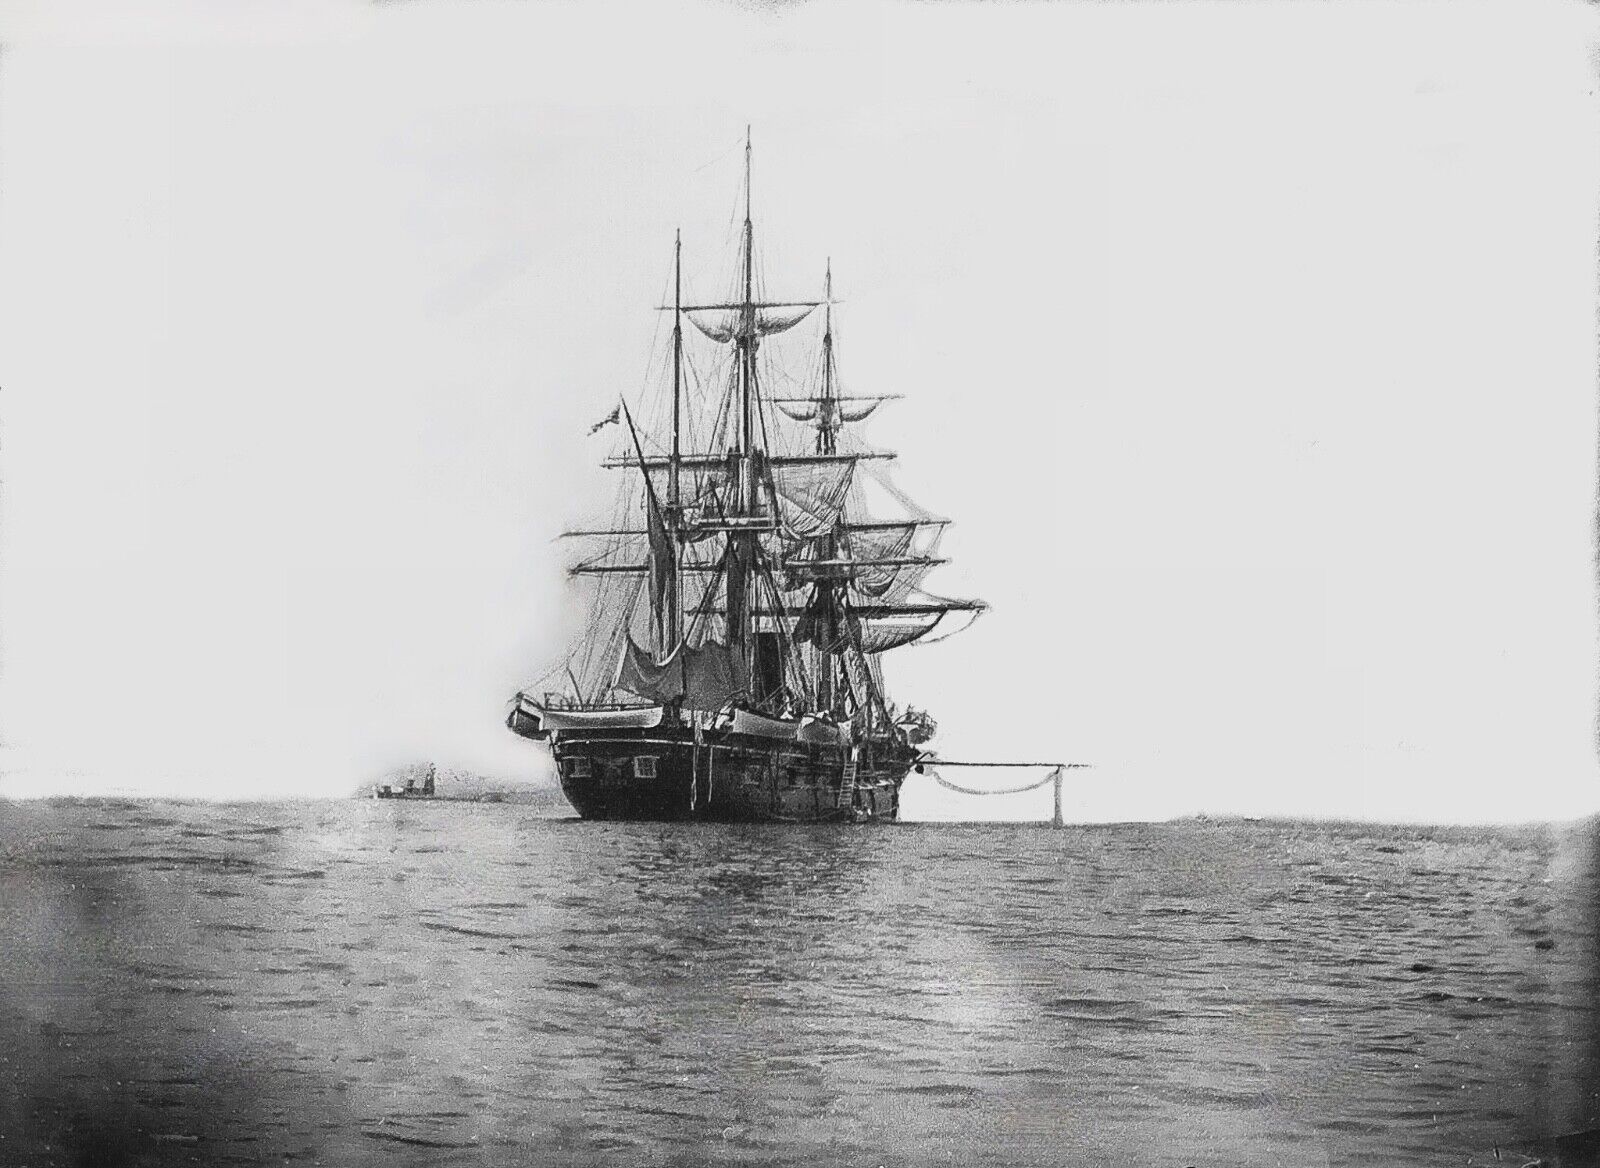 ANTIQUE GLASS PLATE PHOTO NEGATIVE - Aug 6, 1897 - USS Essex - Newport, RI